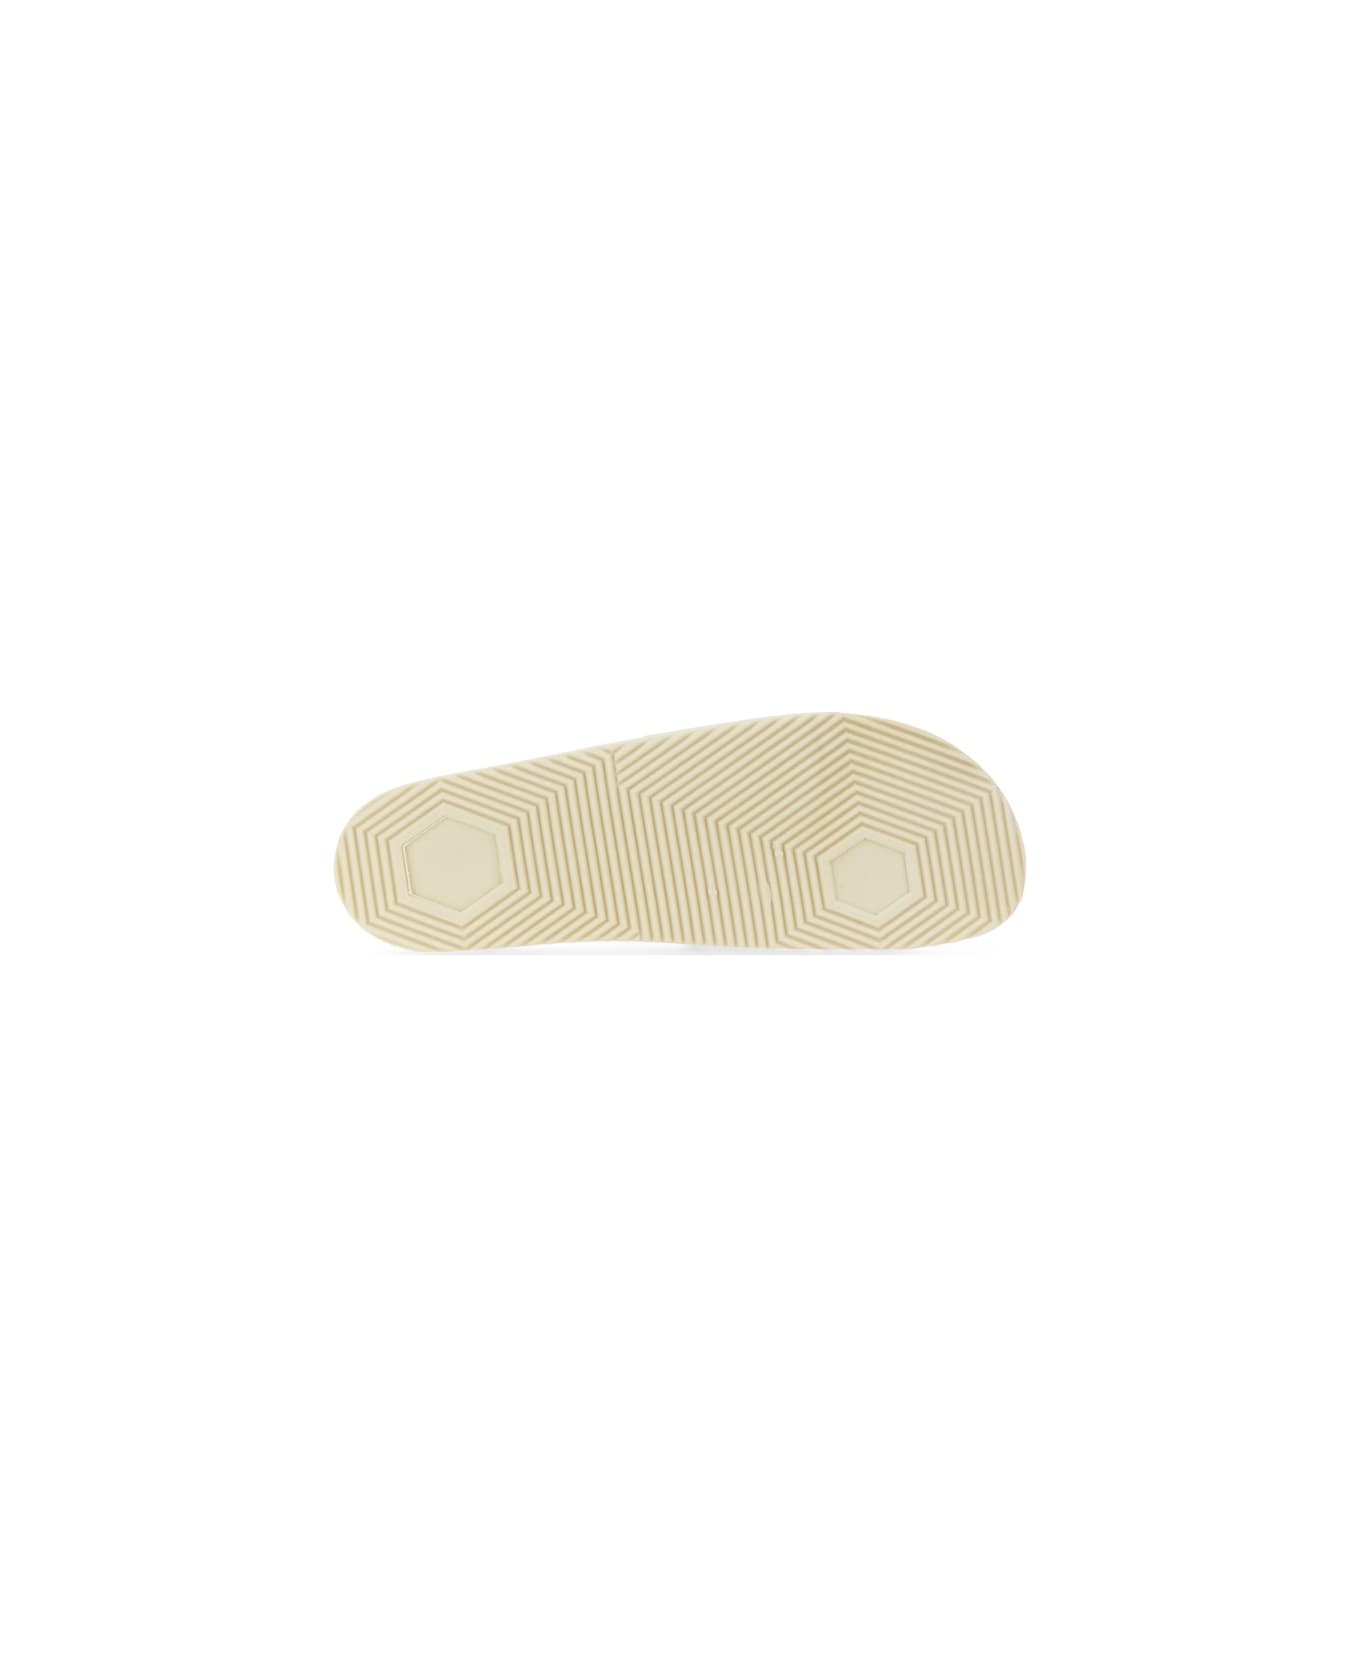 Woolrich Slide Sandal - WHITE サンダル